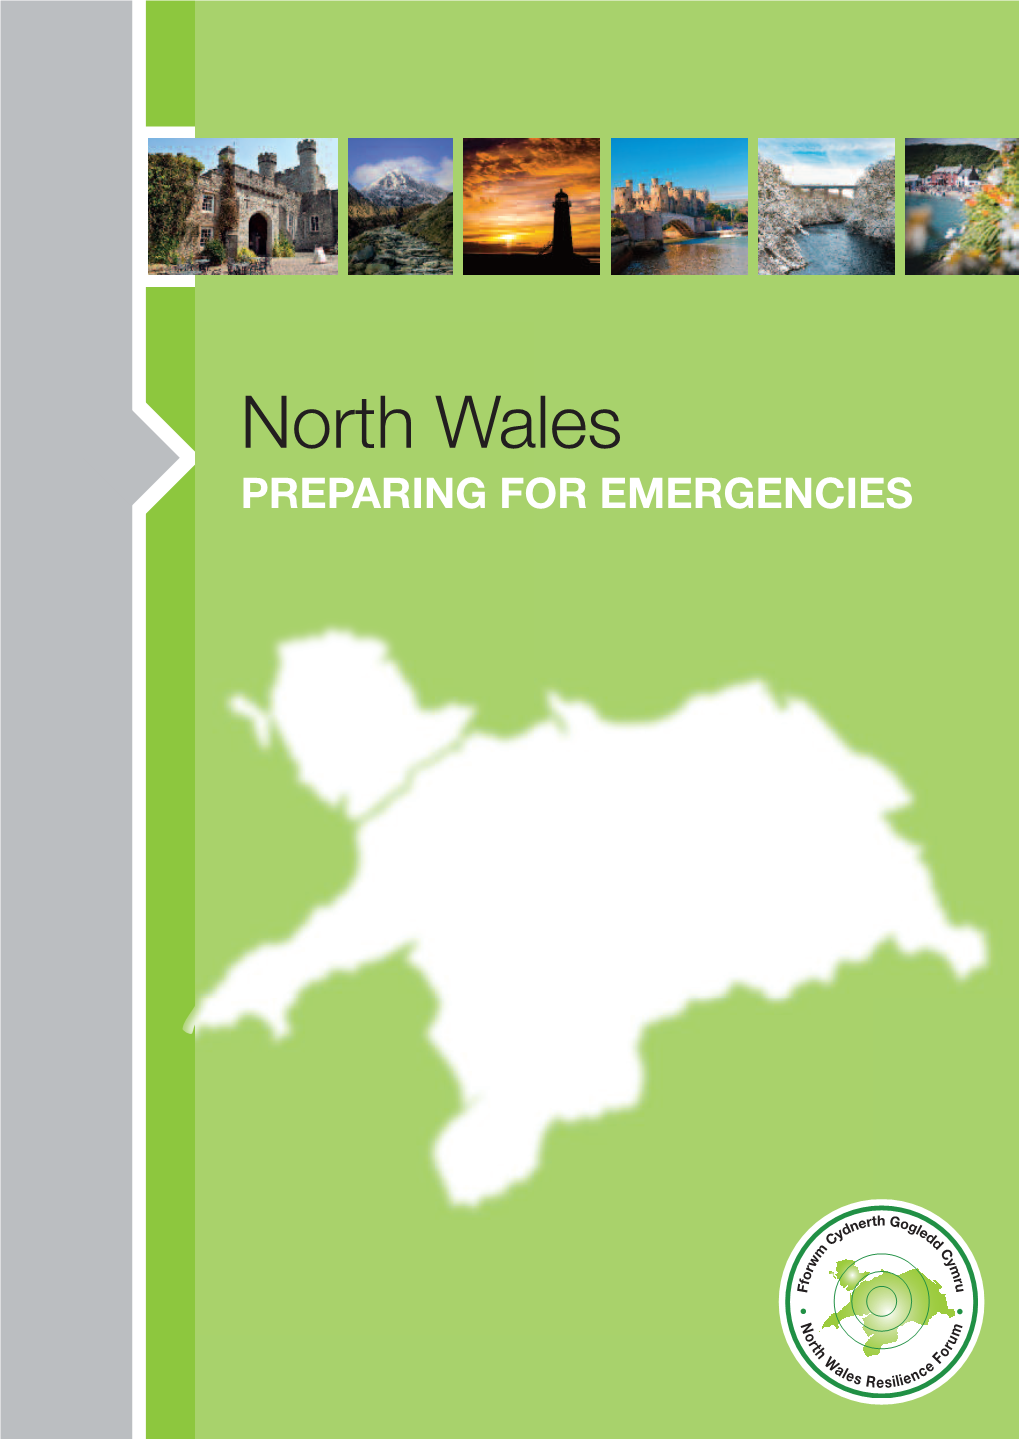 North Wales PREPARING for EMERGENCIES Contents